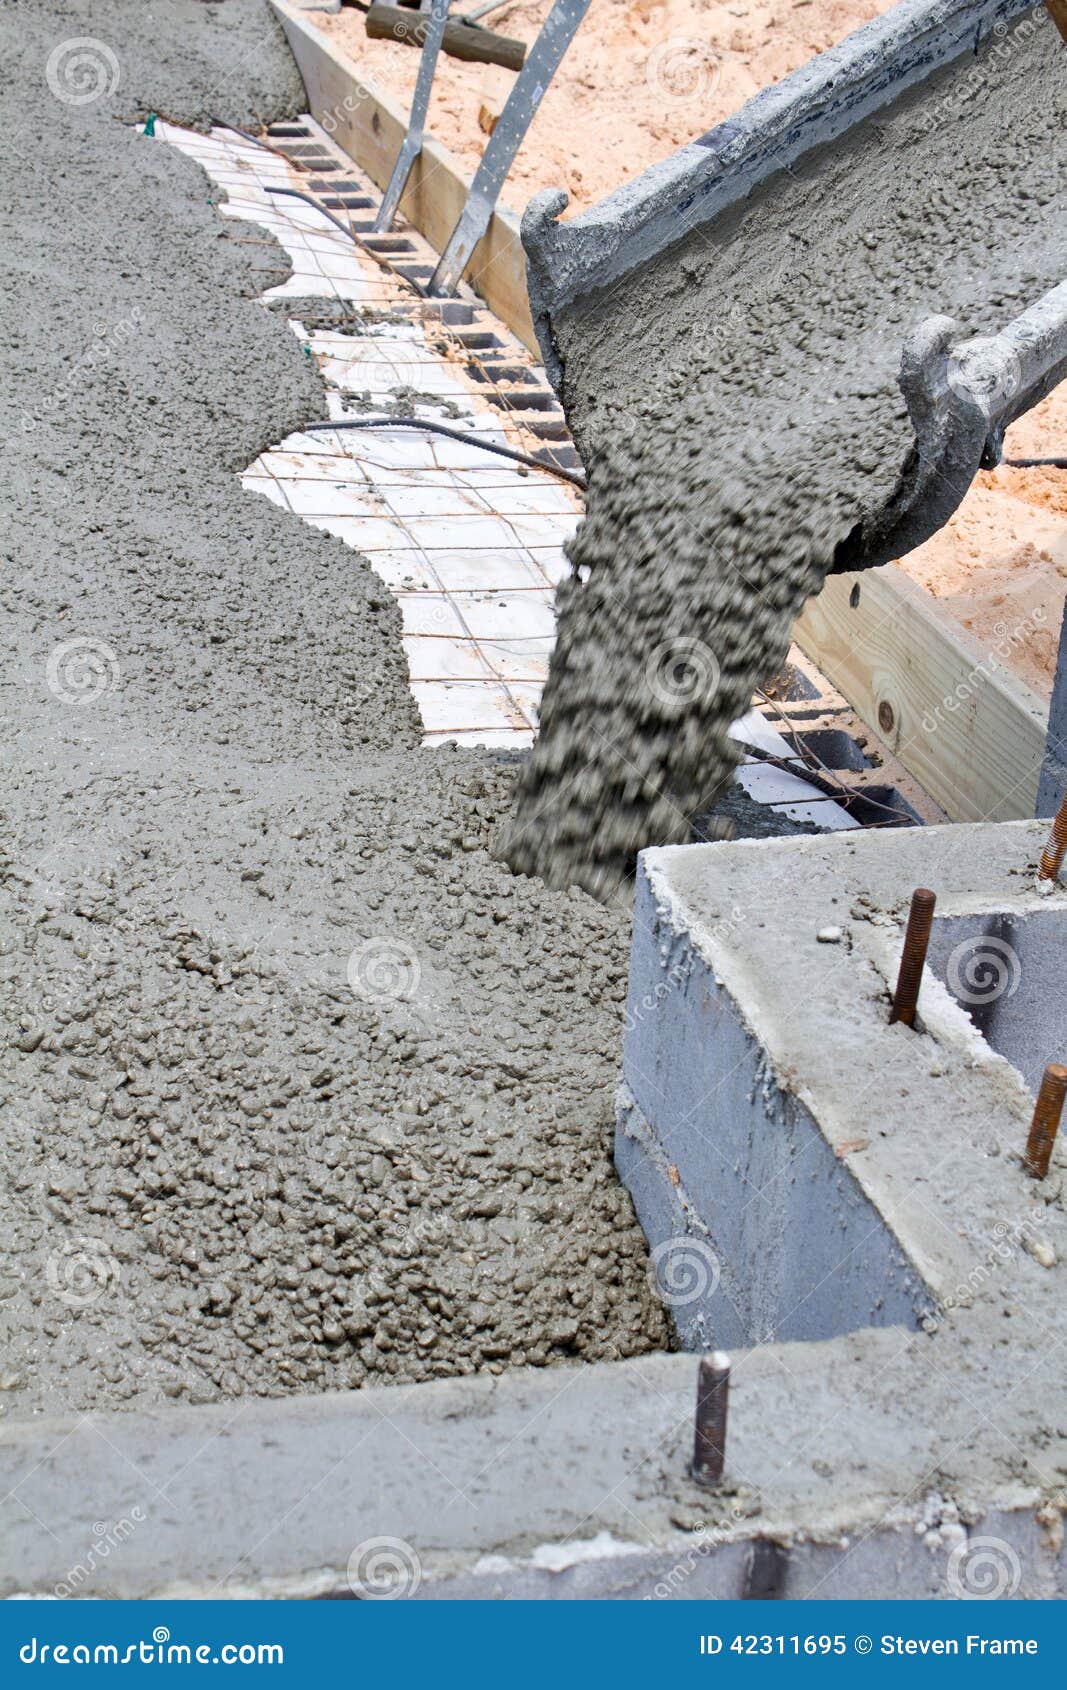 pouring concrete slab wet cement pours down truck chute to fill home building construction site 42311695